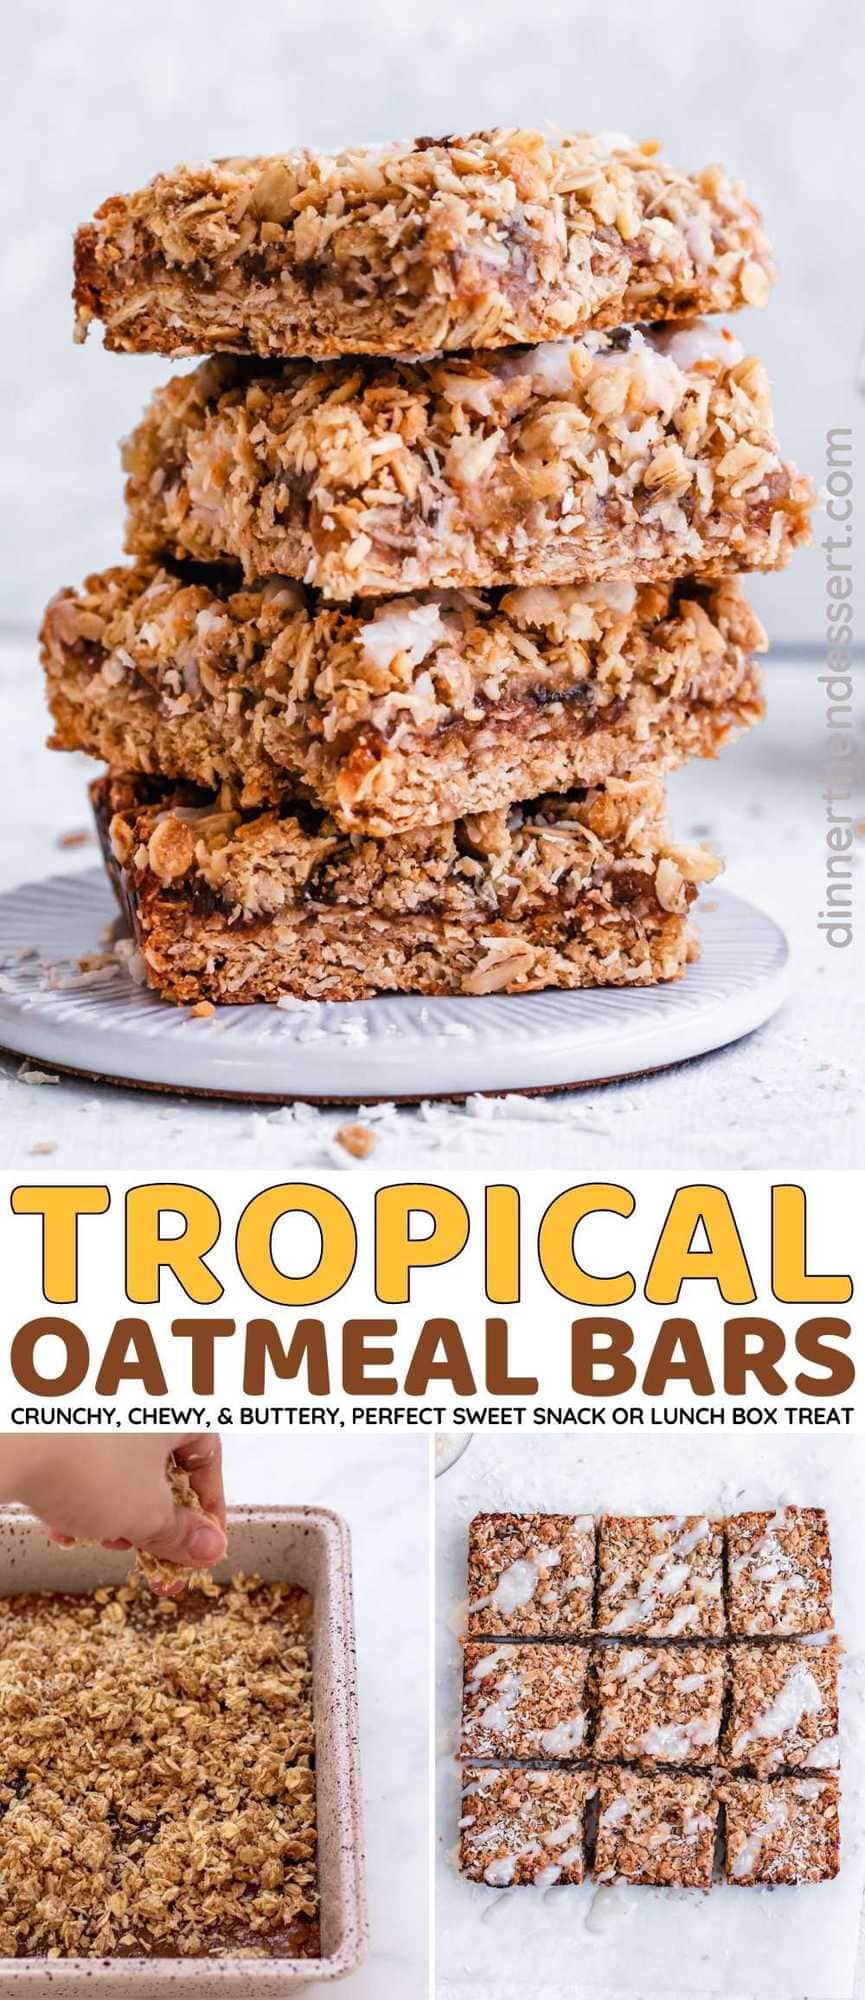 Tropical Oatmeal Bars collage